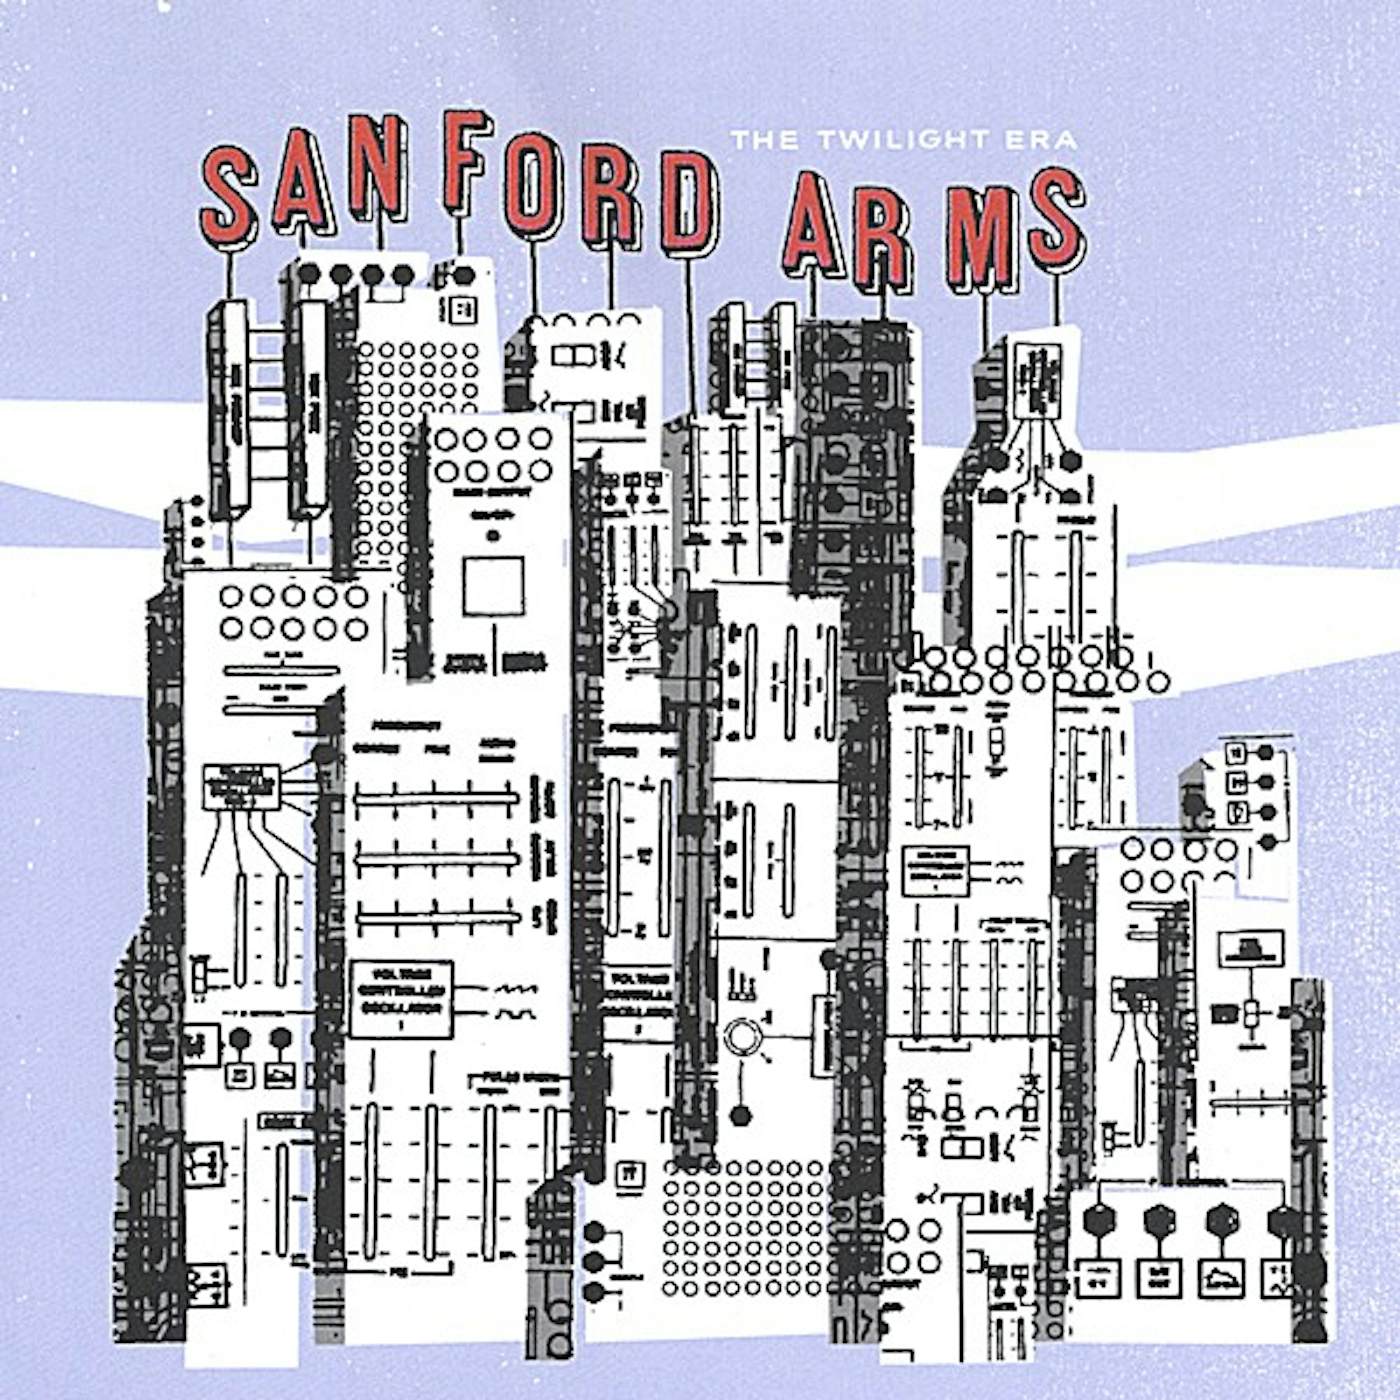 Sanford Arms TWILIGHT ERA CD